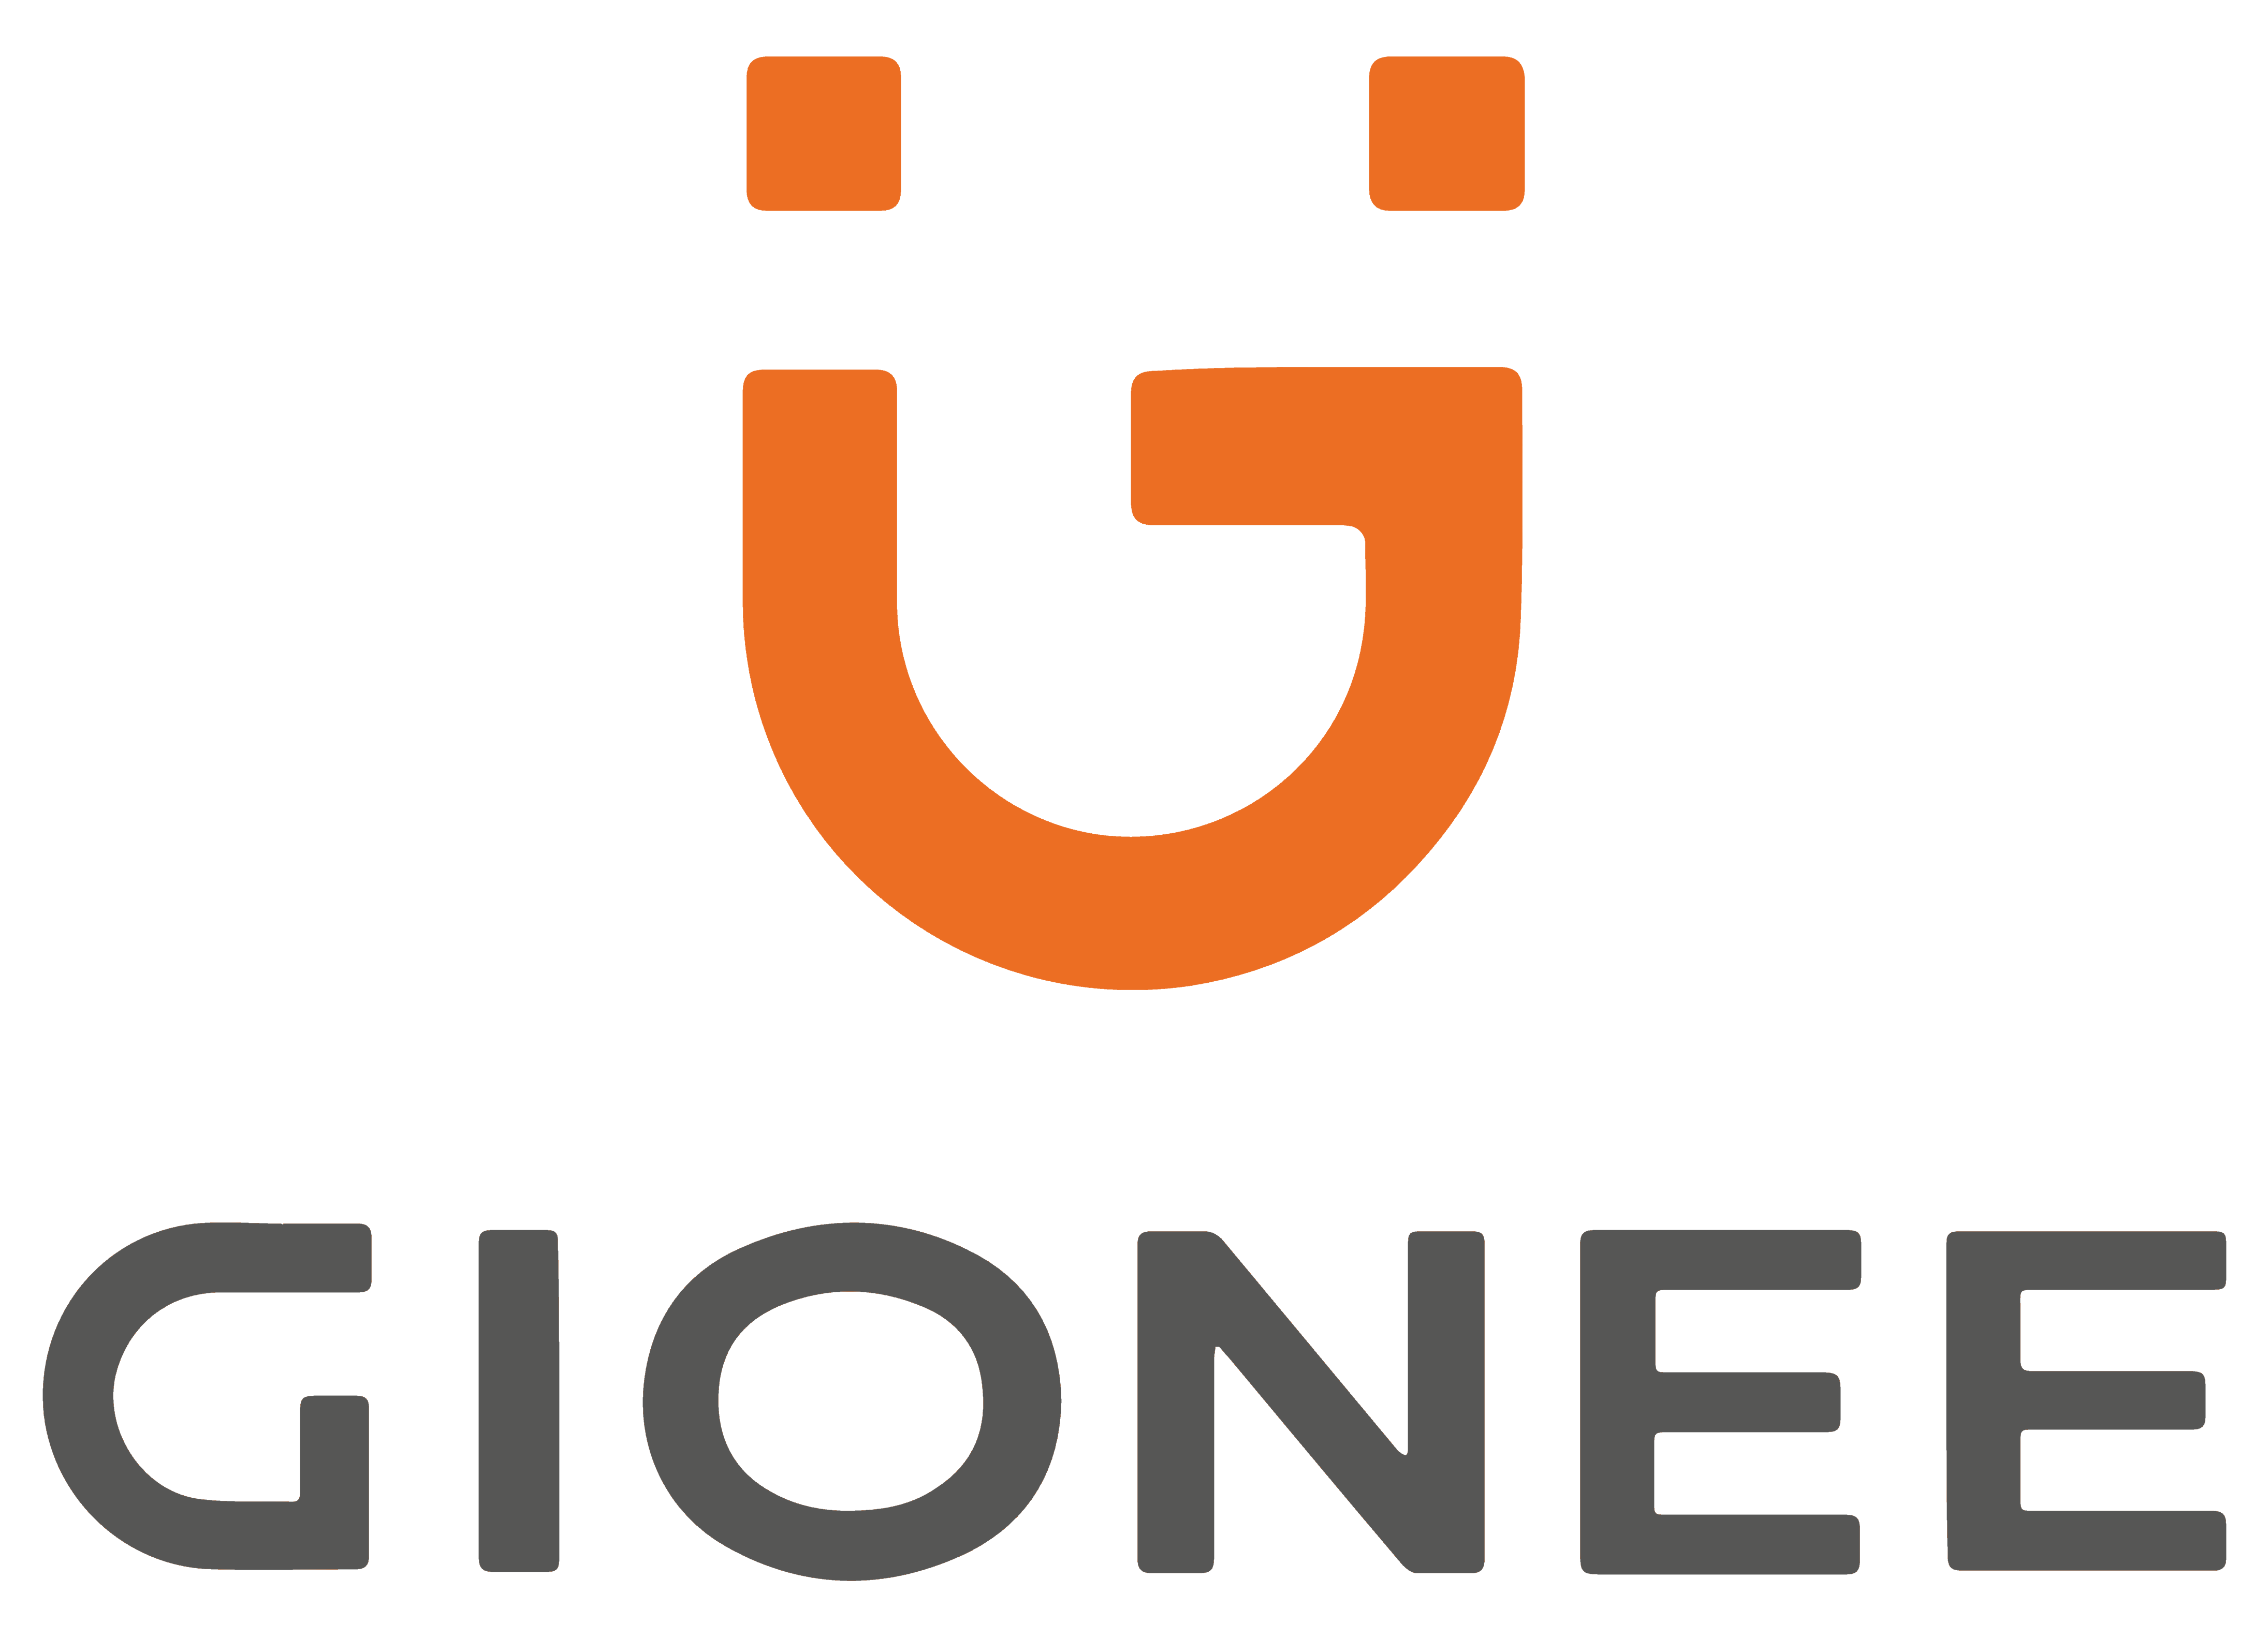 Gionee logo, logotype